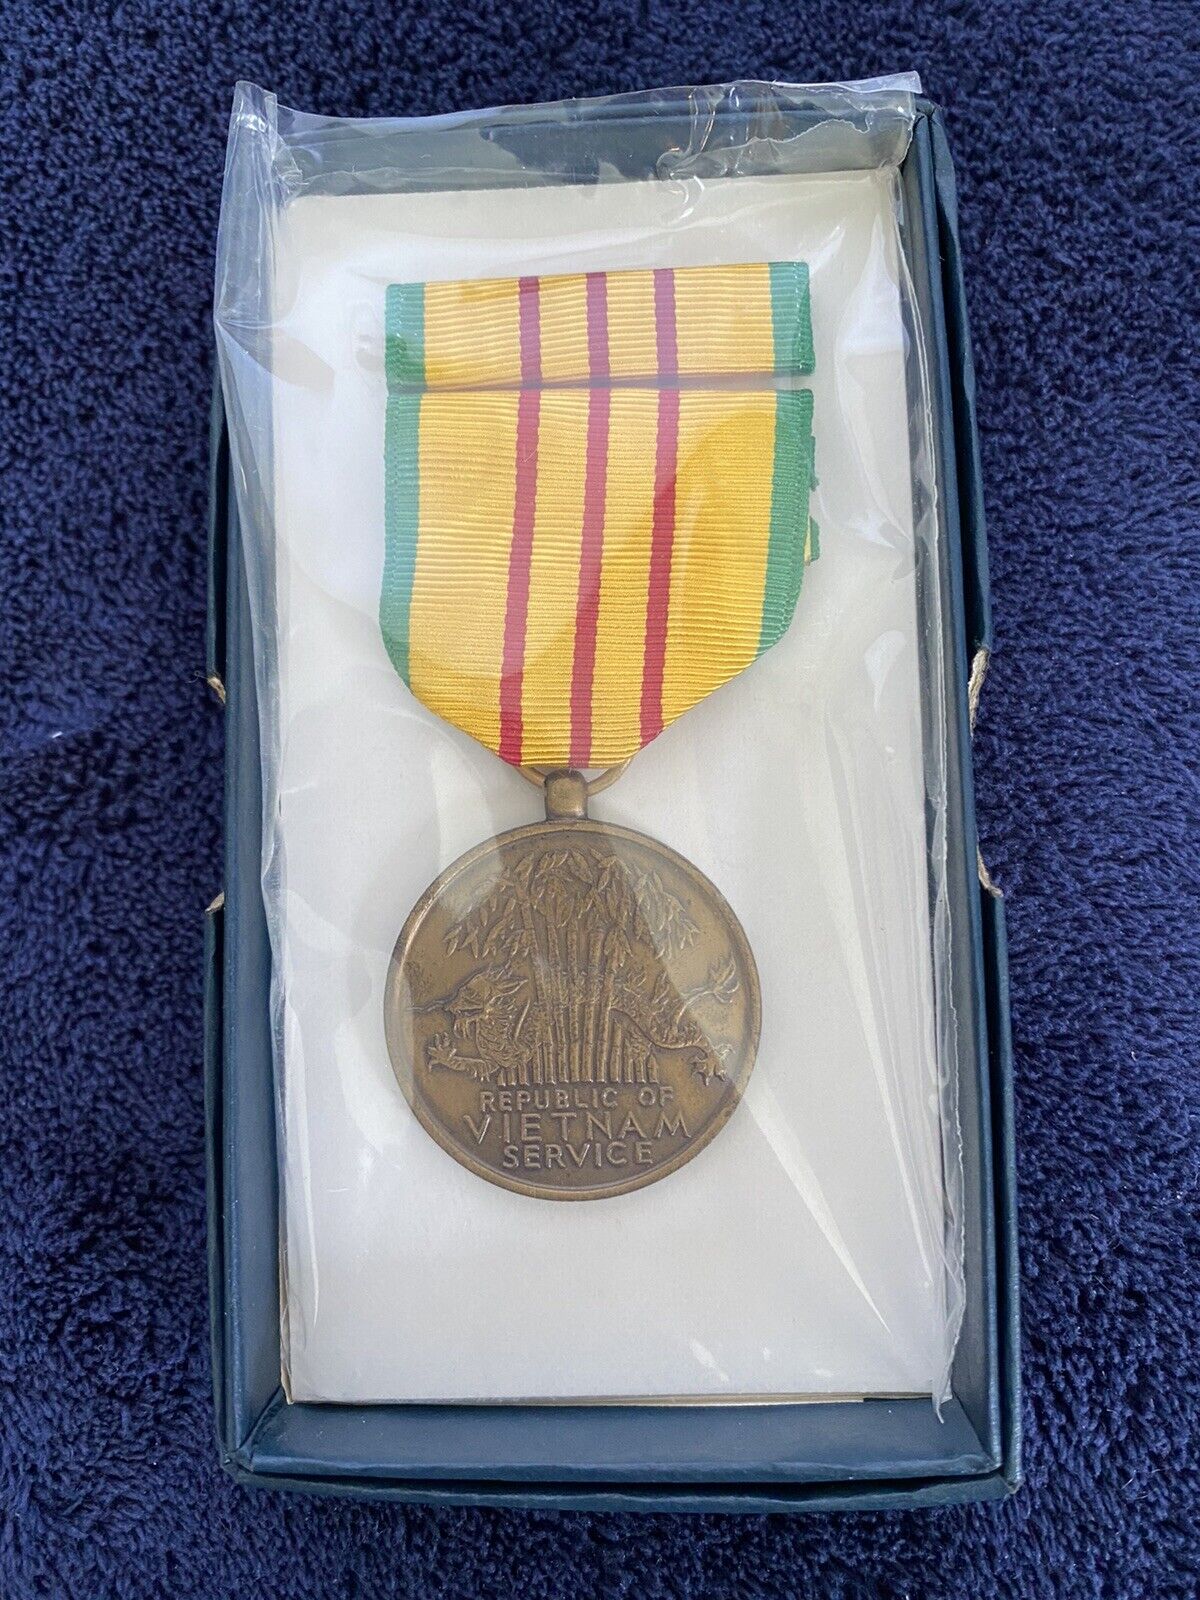 Republic of Vietnam Service Medal & Ribbon in Original Box U. S. Military Medal